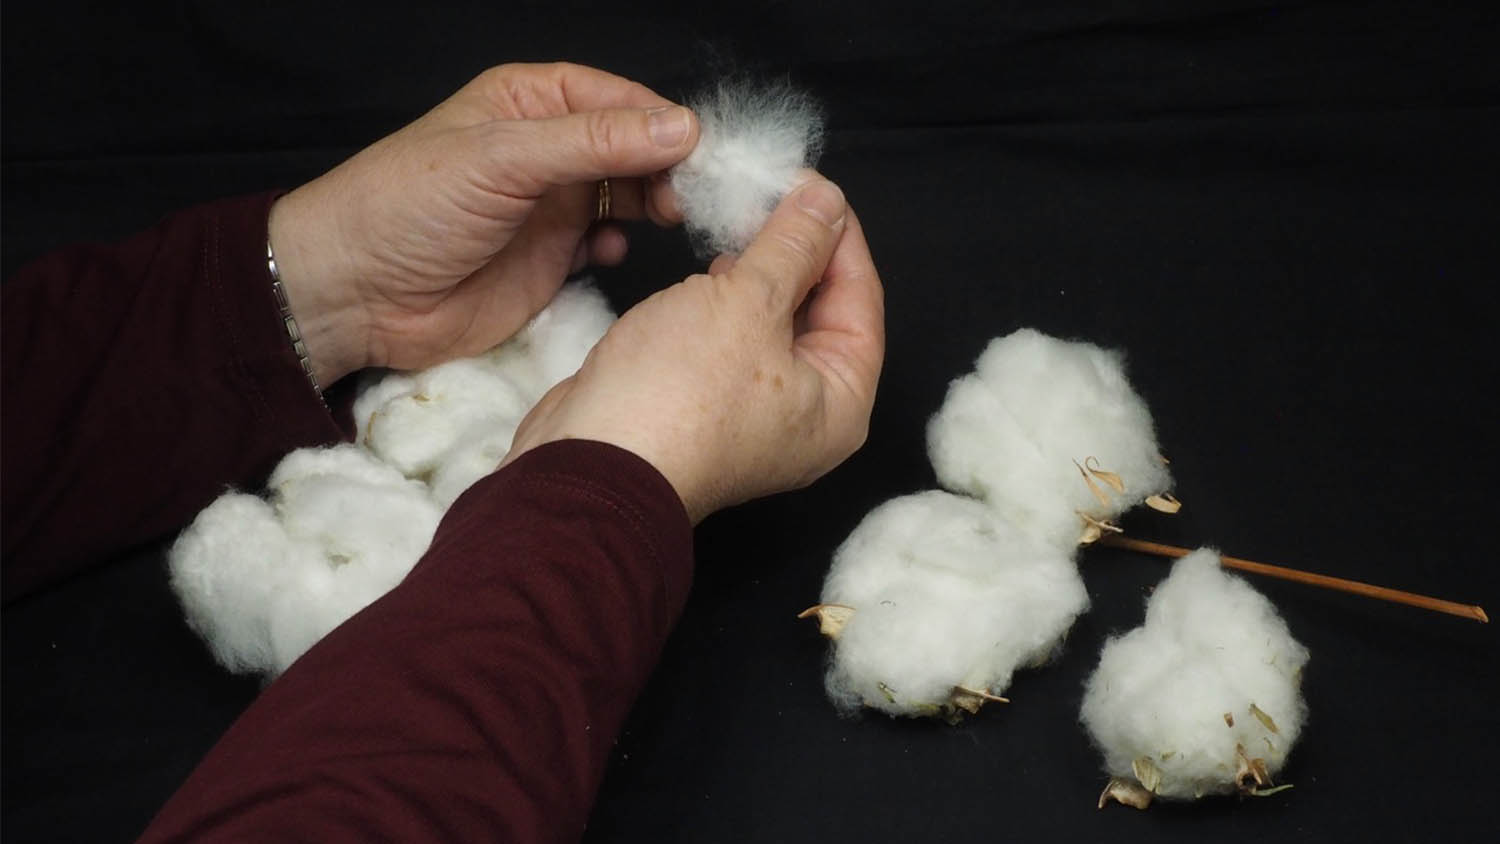 Human hands pull apart cotton boll fibers